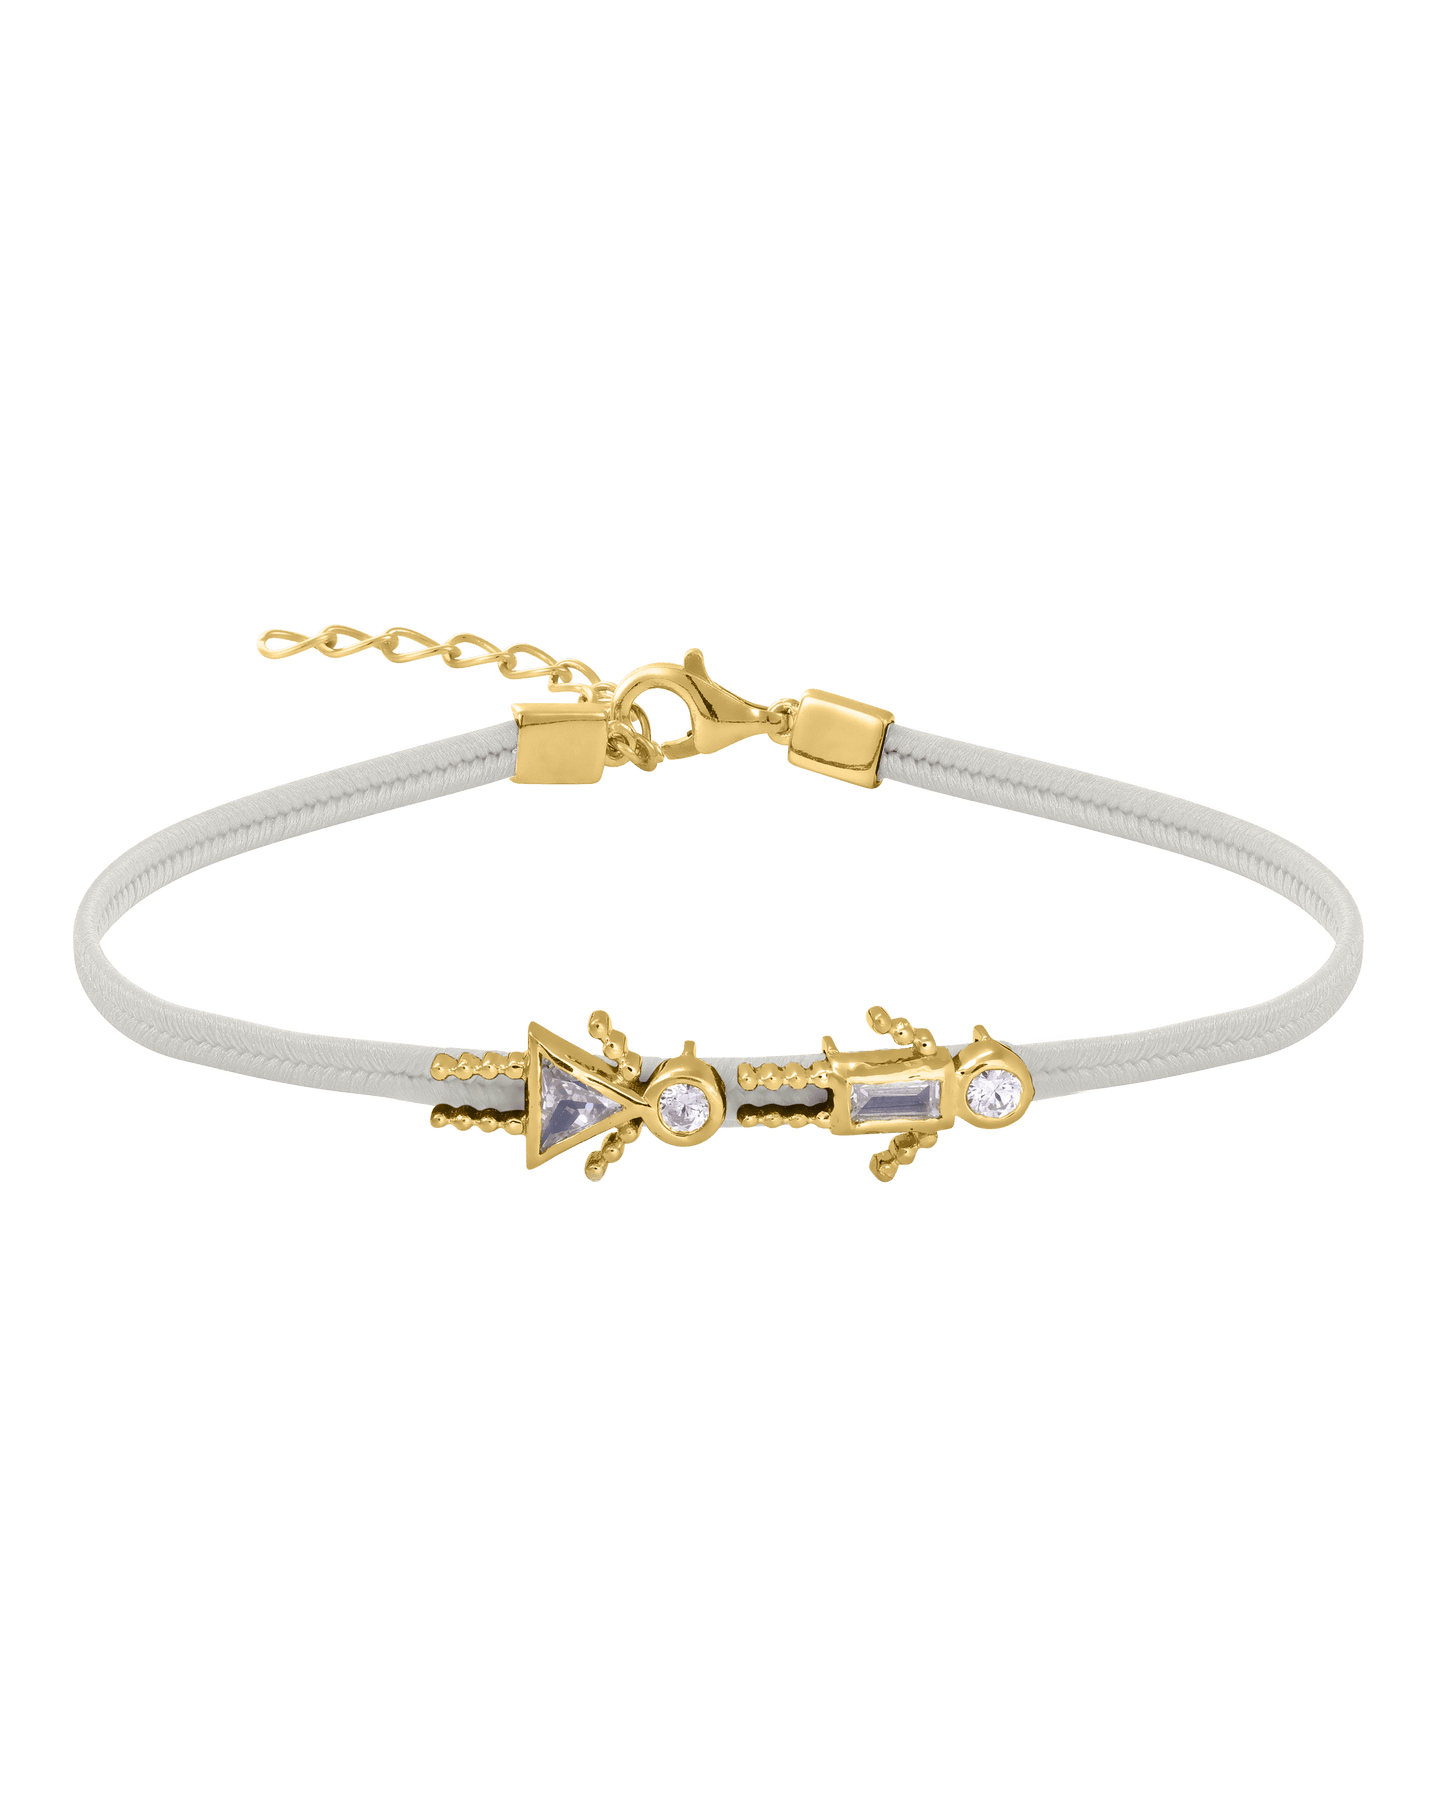 Mini Me Cord Bracelet - 18K Gold Vermeil Bracelets magal-dev Cream 2 6"+1.5" extender